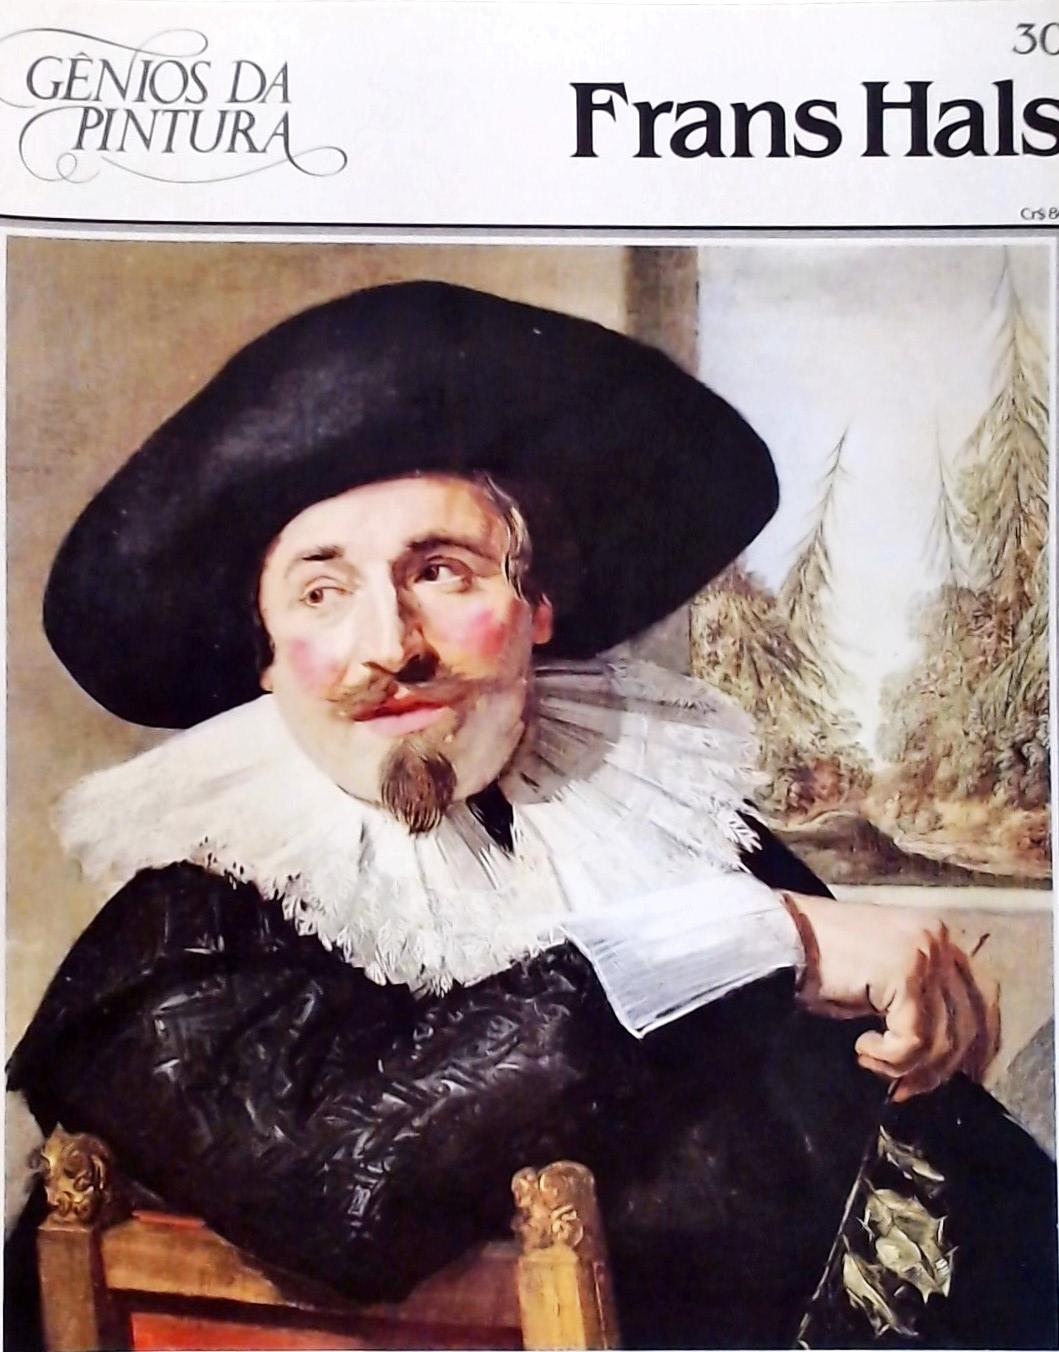 Gênios da Pintura - Frans Hals